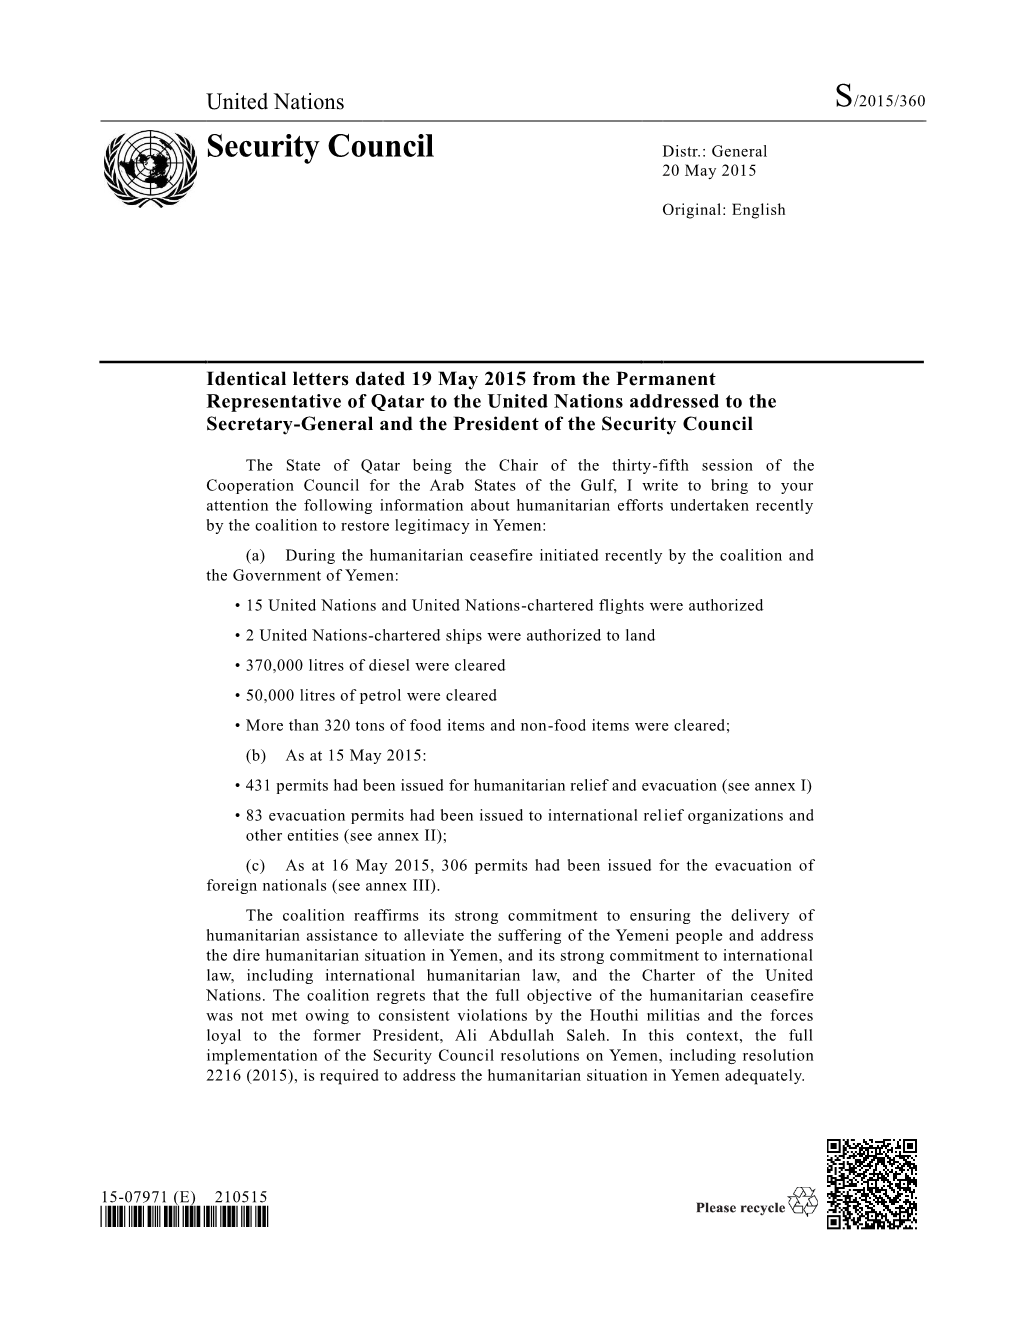 Security Council Distr.: General 20 May 2015